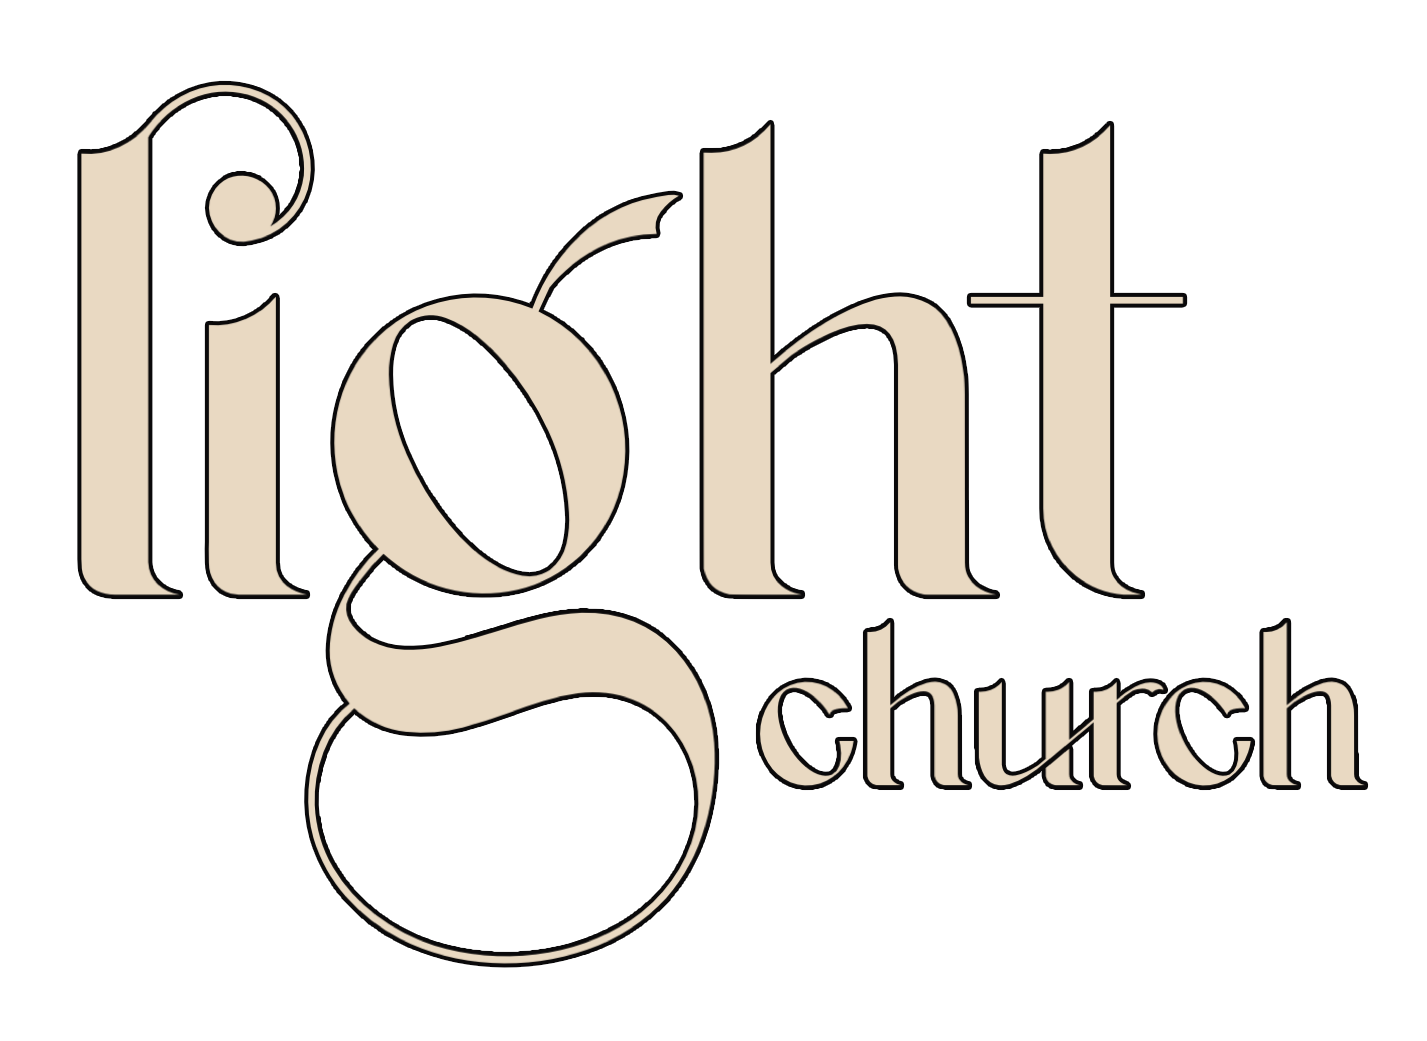 Light Church